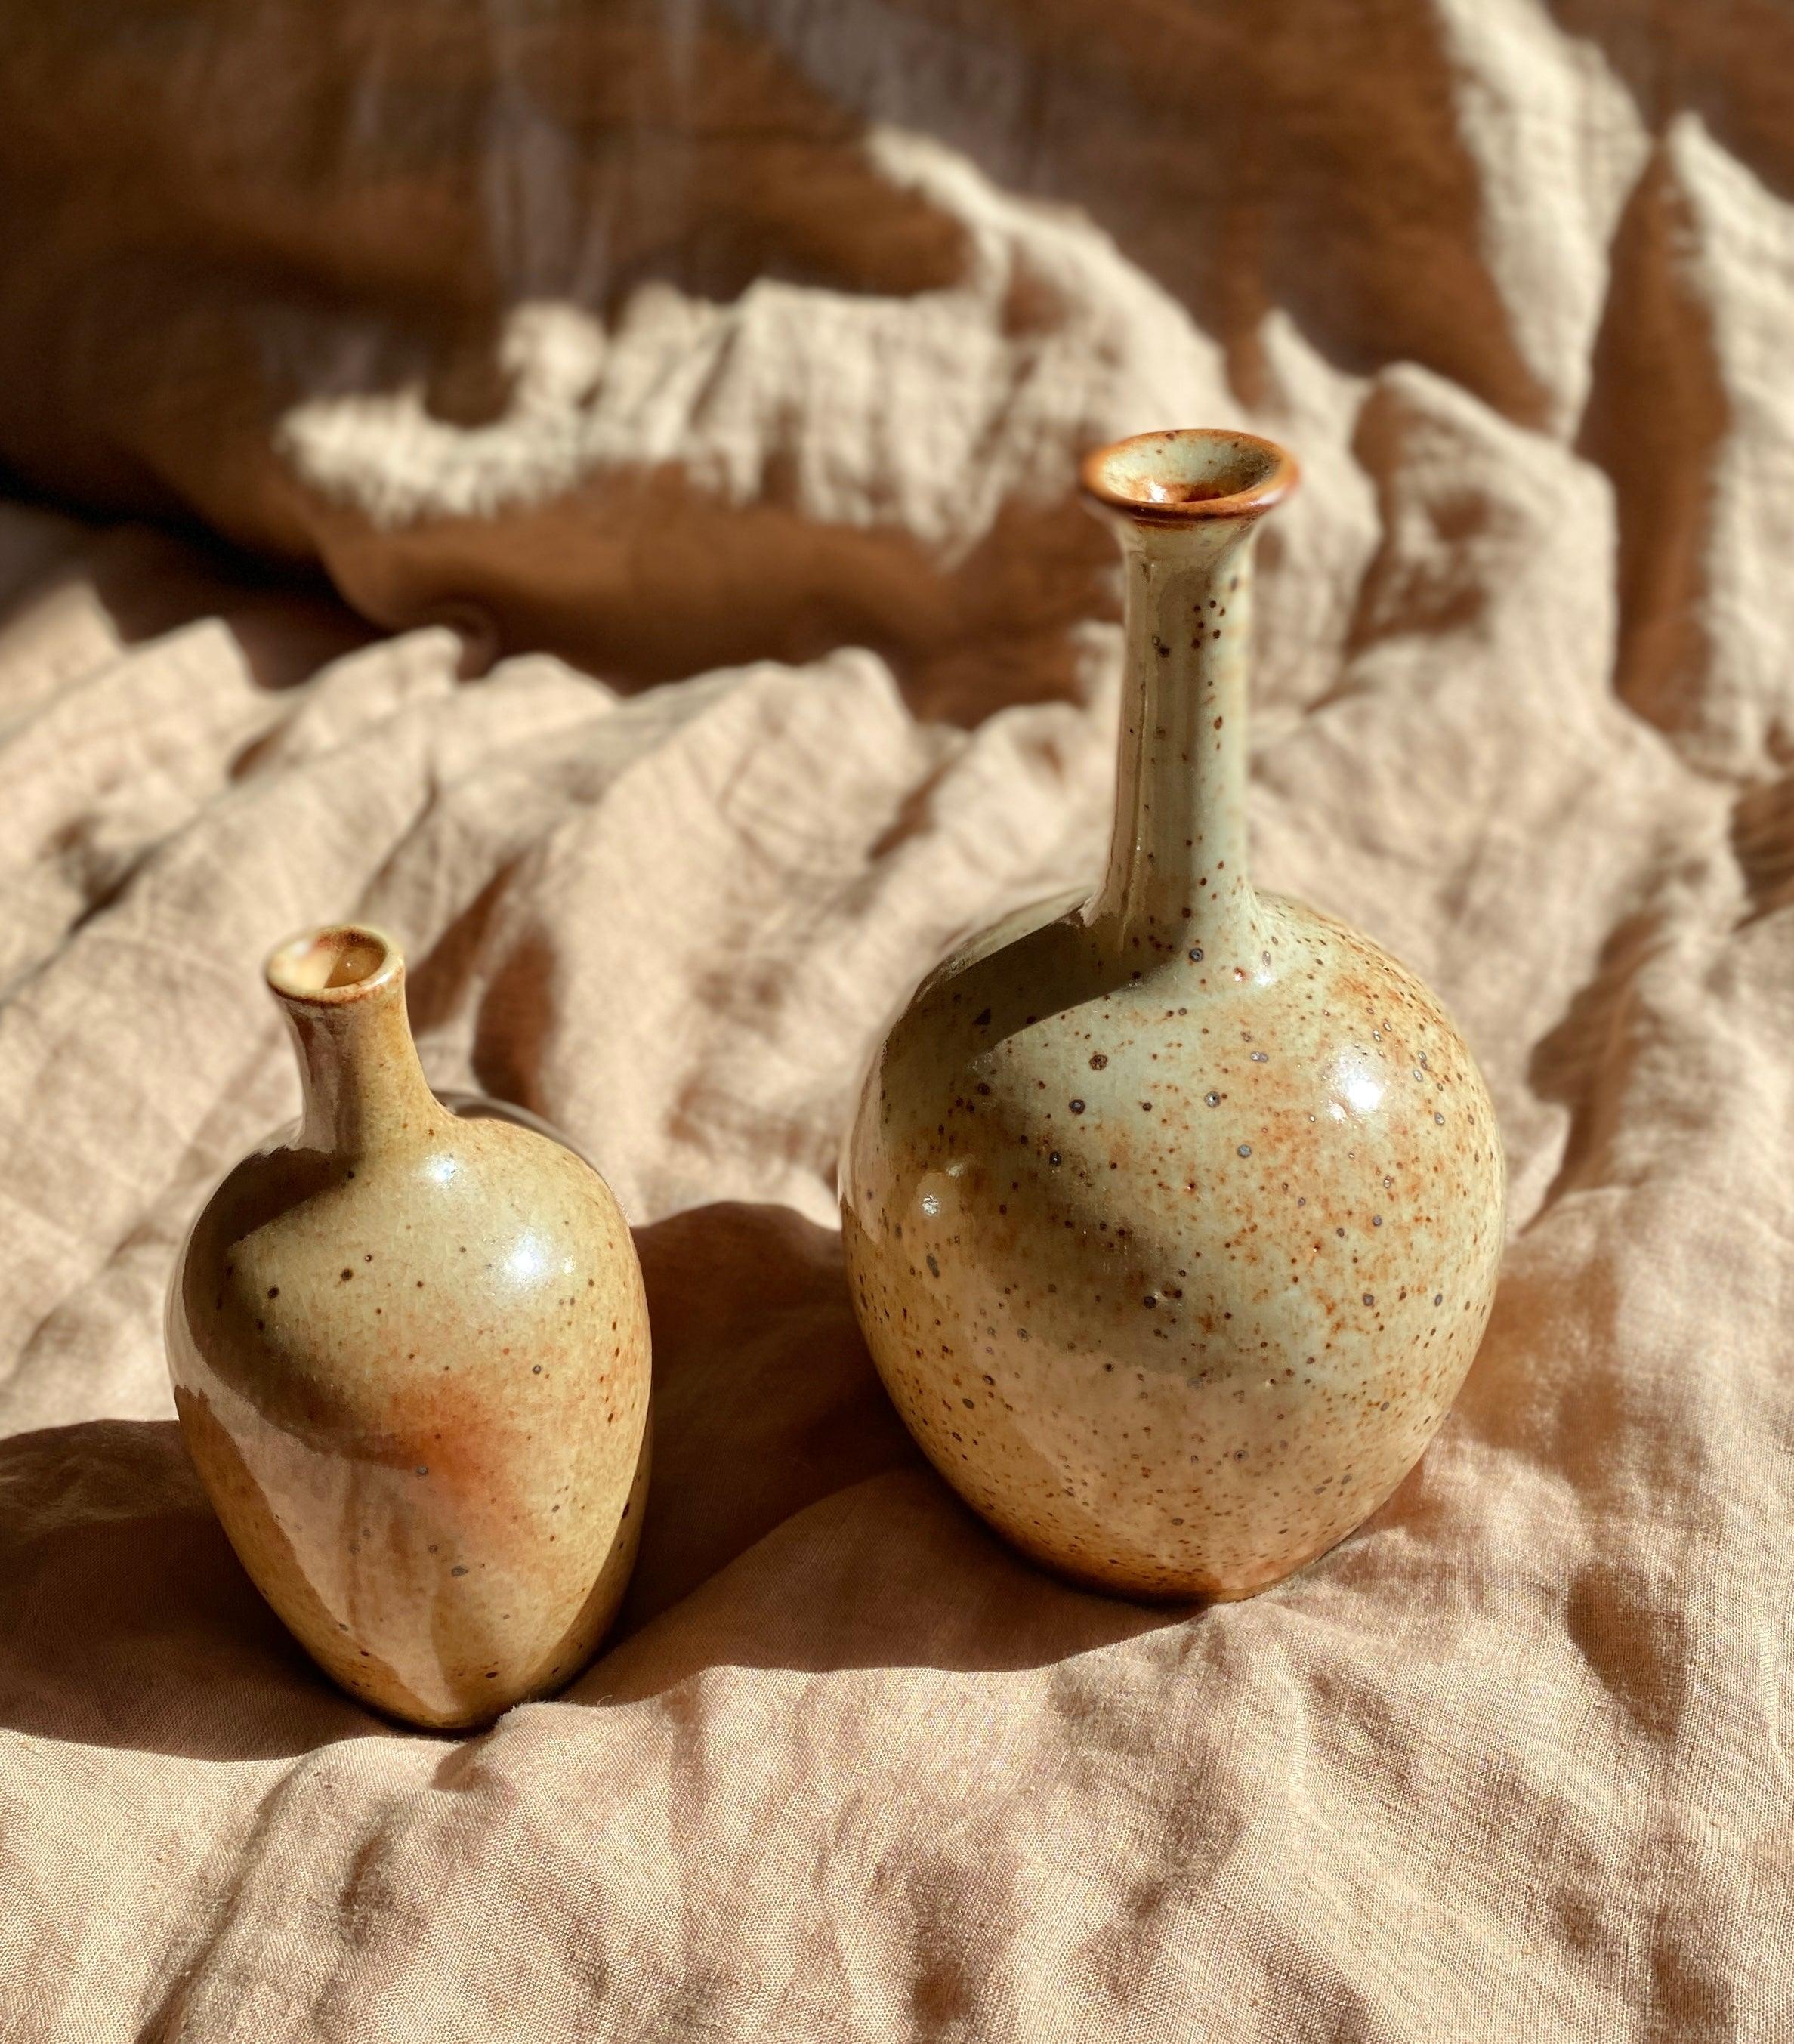 Shino rustic bottle-neck vase No. 9 - Dana Chieco Studio